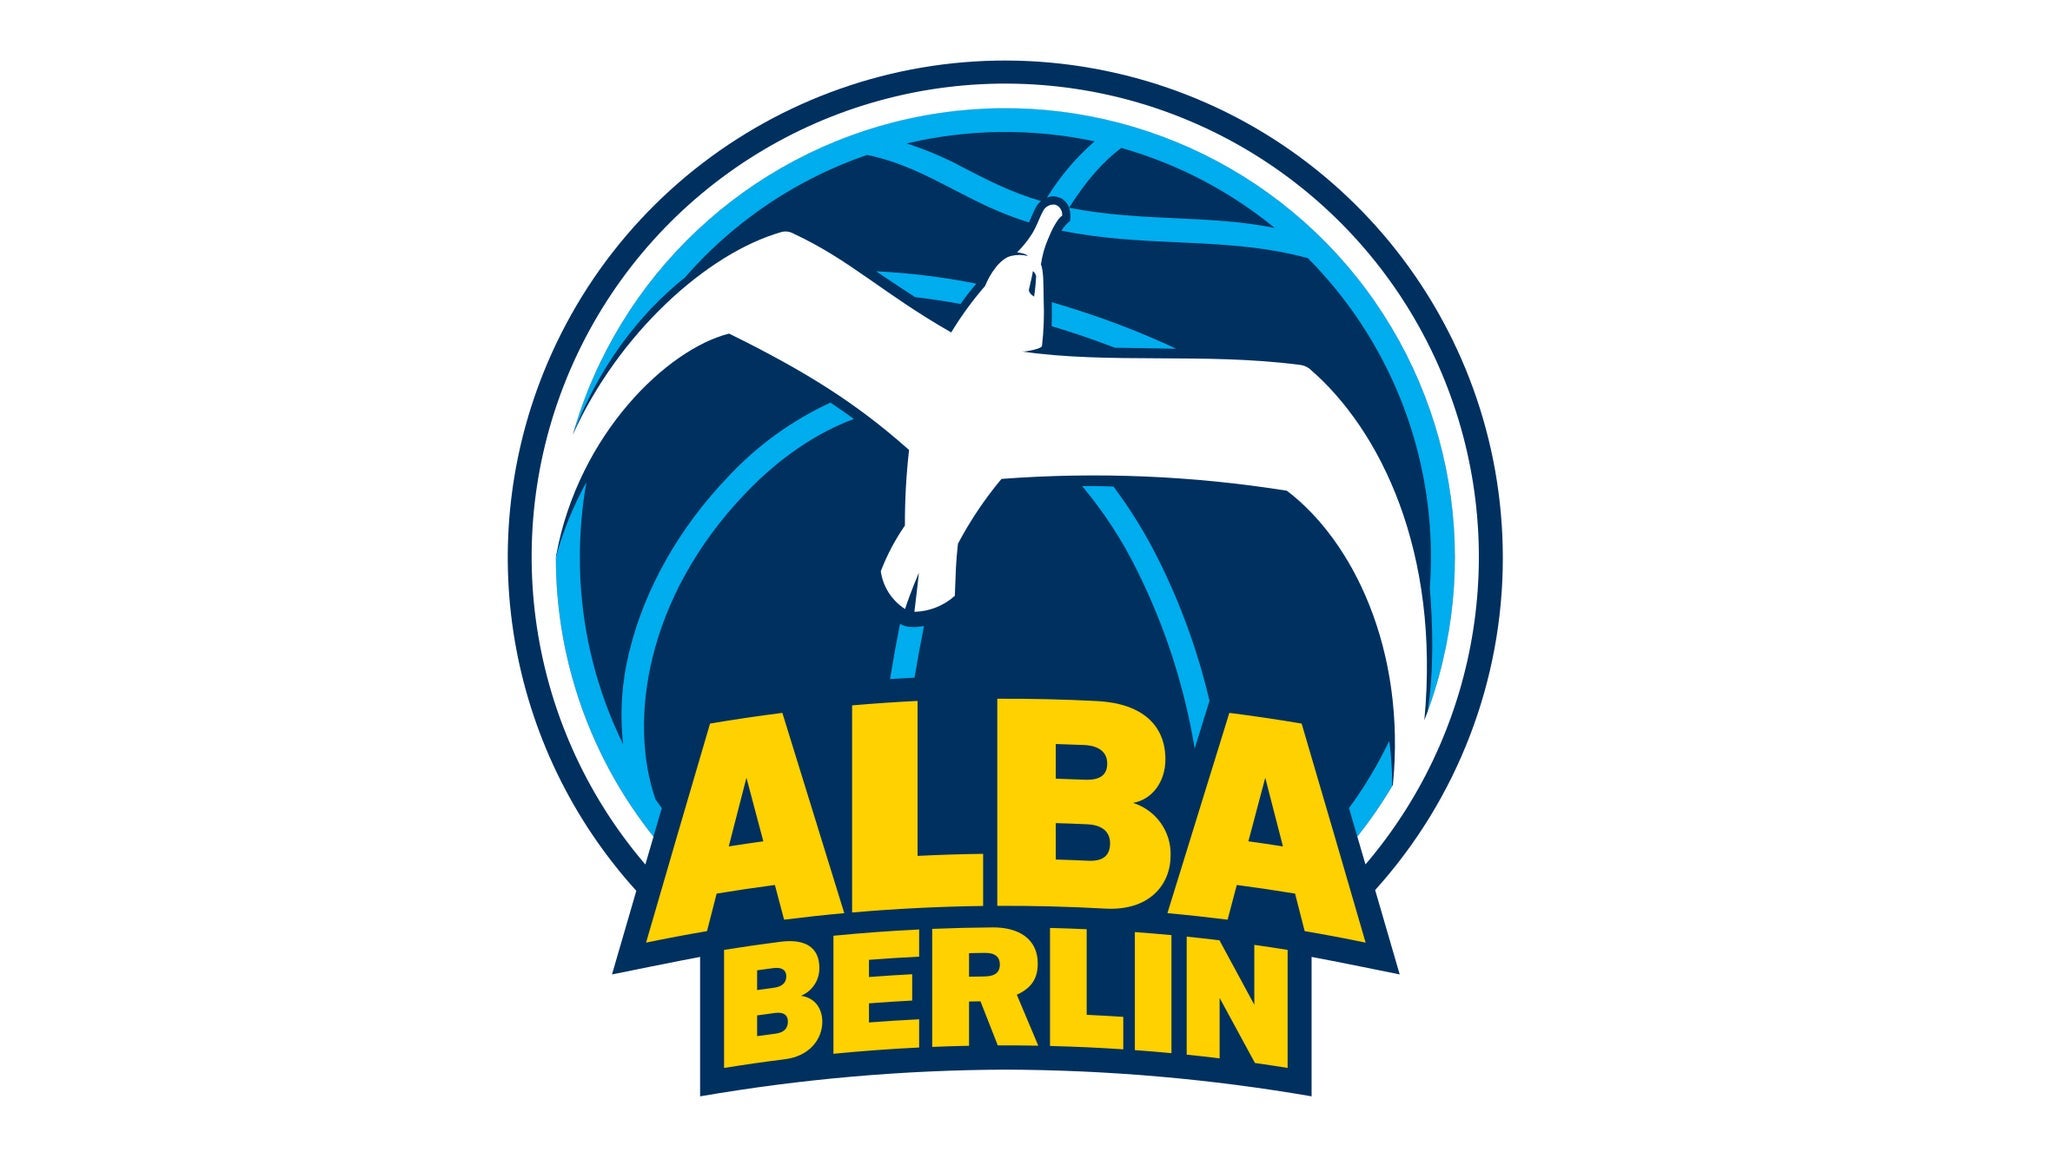 Alba Berlin presale information on freepresalepasswords.com